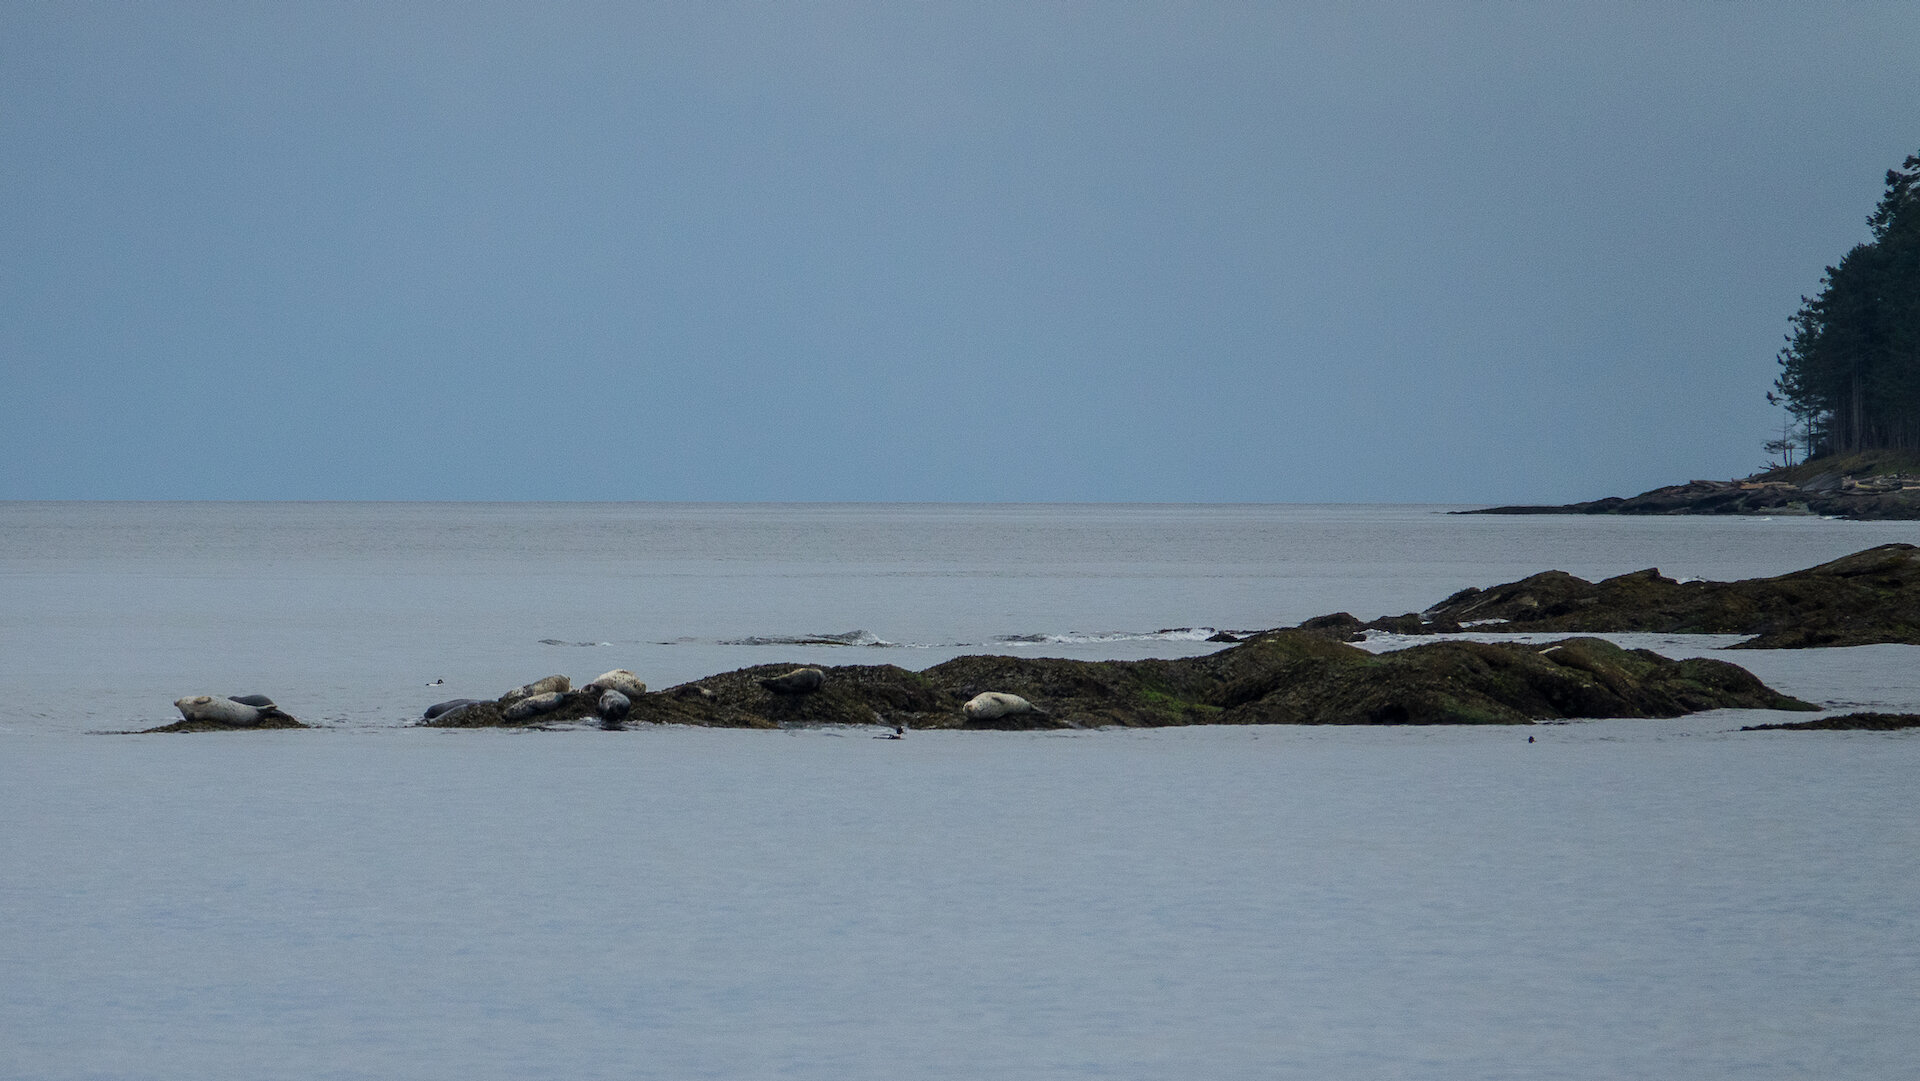  Seals sleeping on the rocks. 